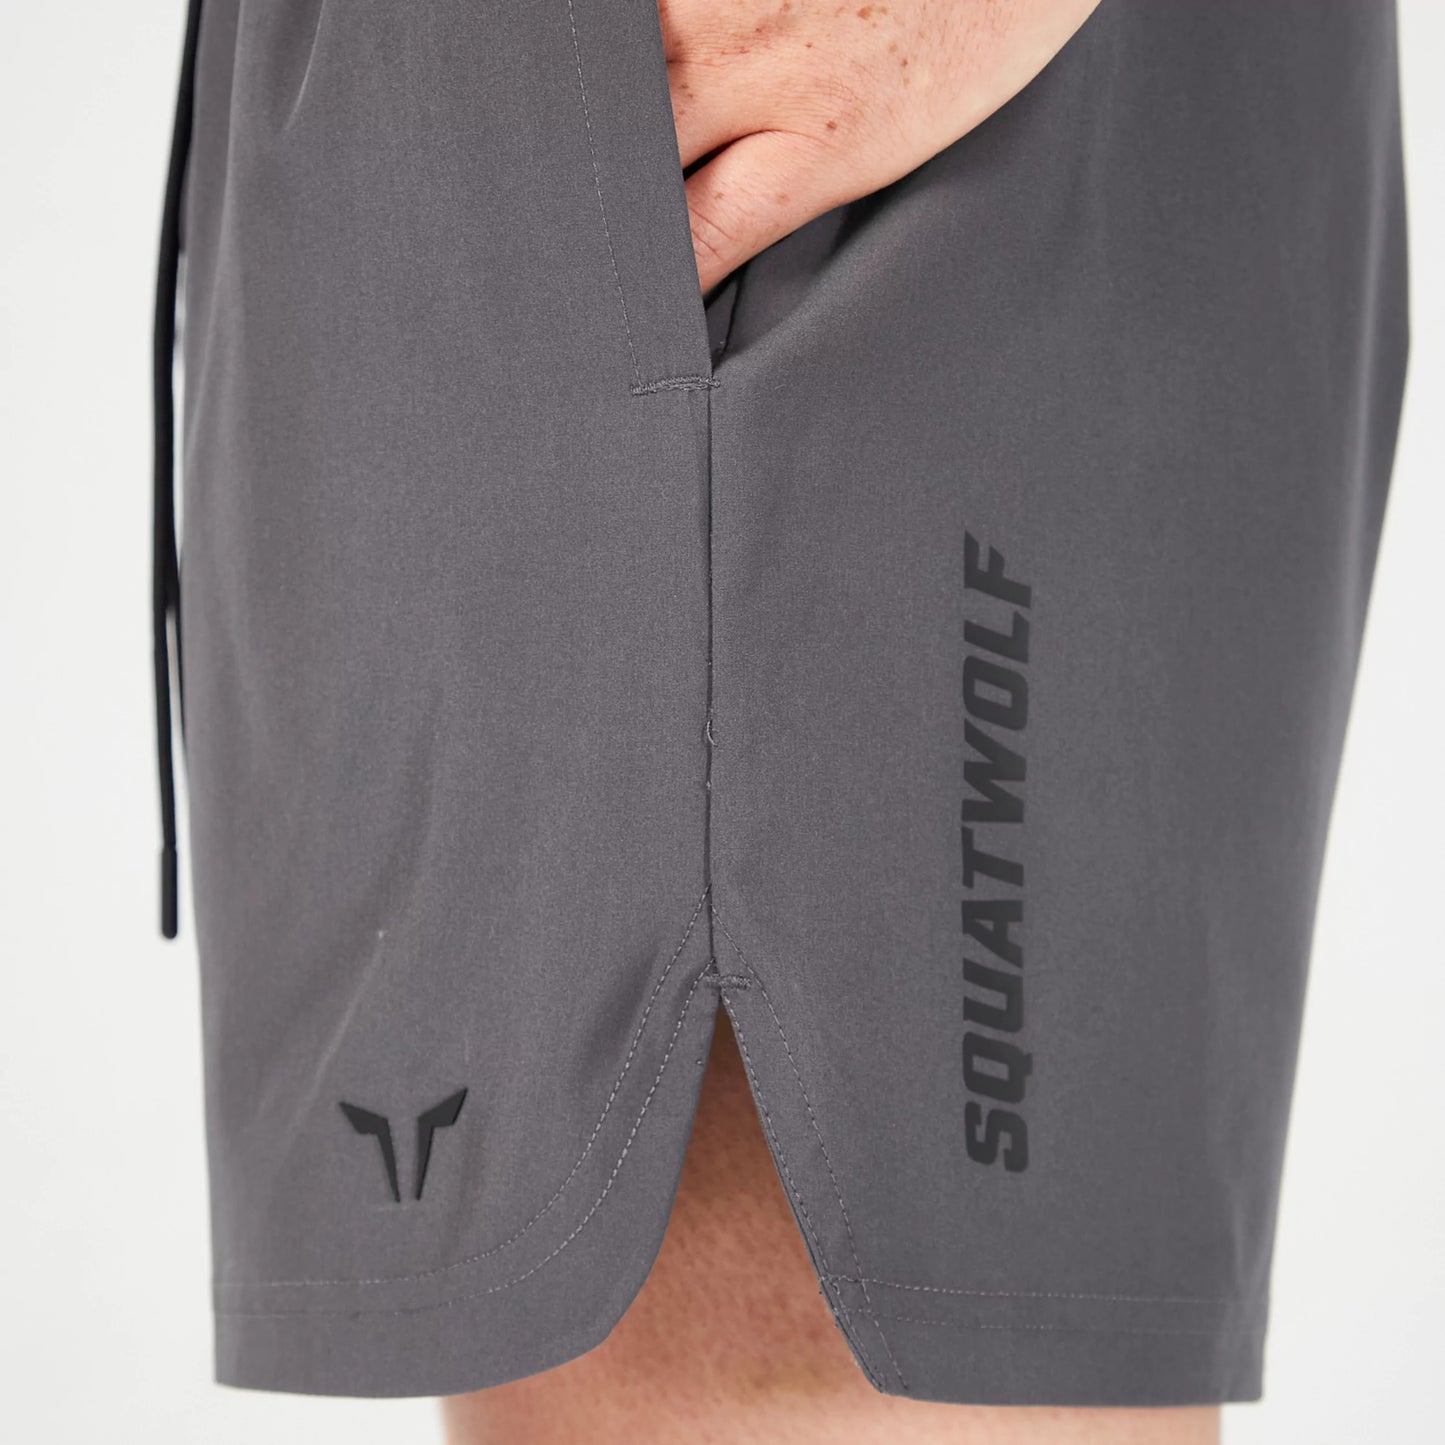 squatwolf-gym-wear-essential-pro-5-inch-shorts-asphalt-workout-short-for-men